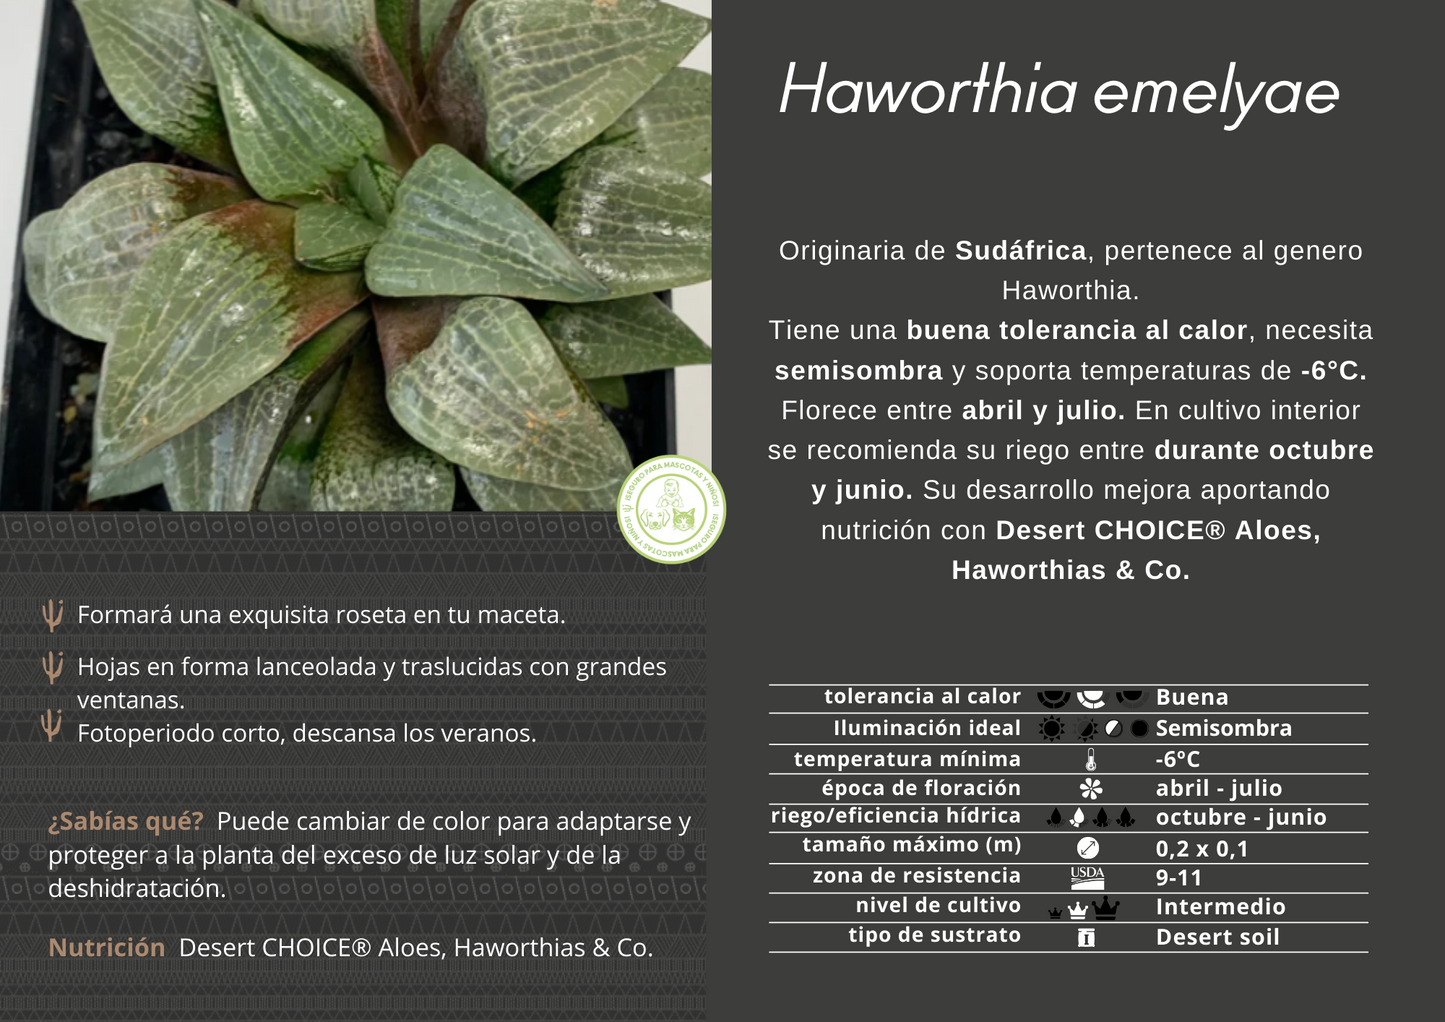 Haworthia emelyae